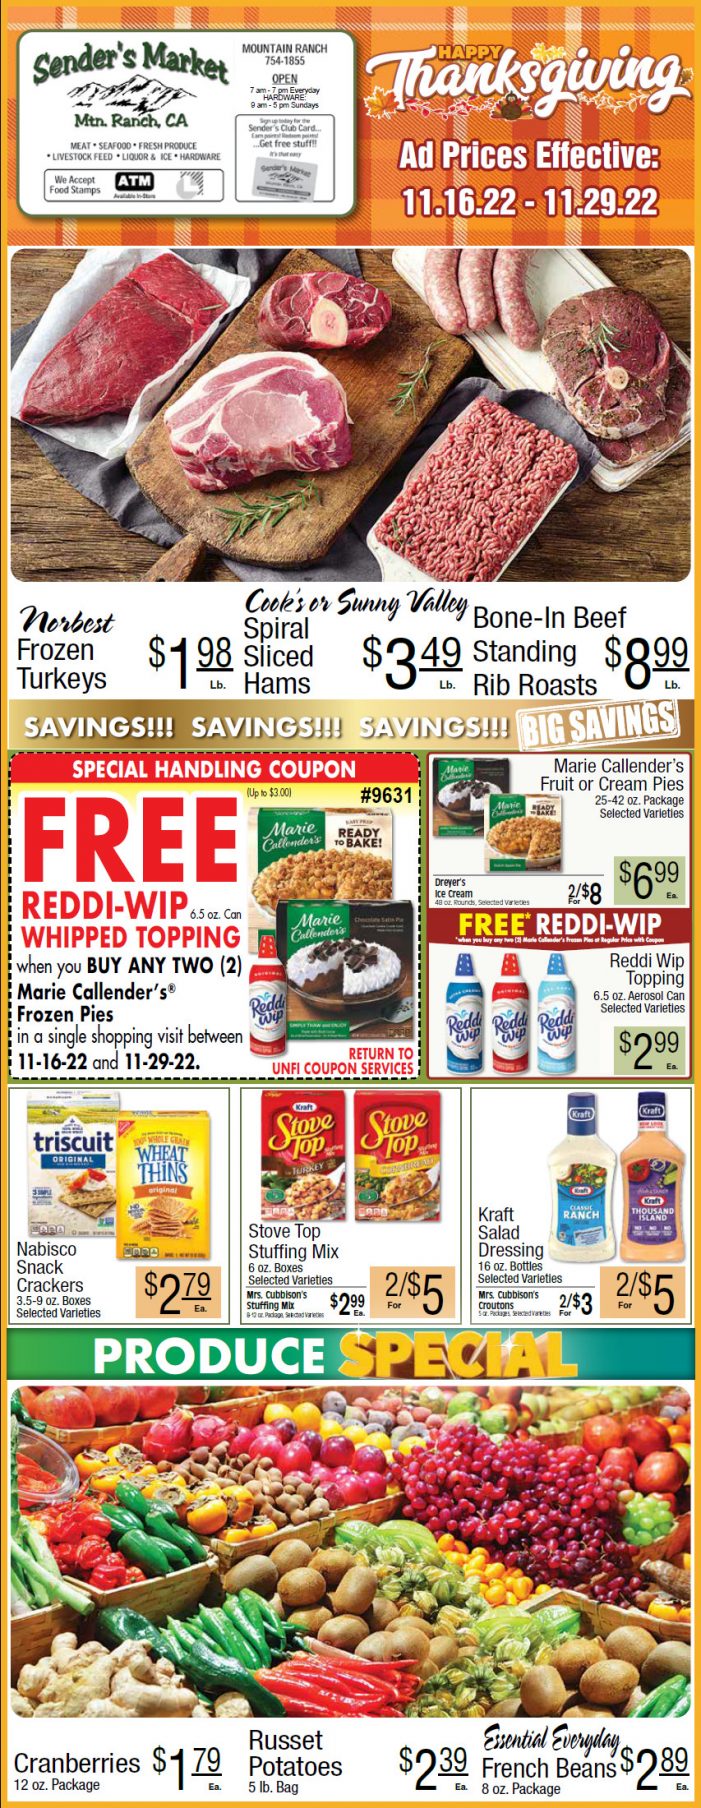 Sender’s Market Thanksgiving Ad & Grocery Specials Through November 29! Shop Local & Save!